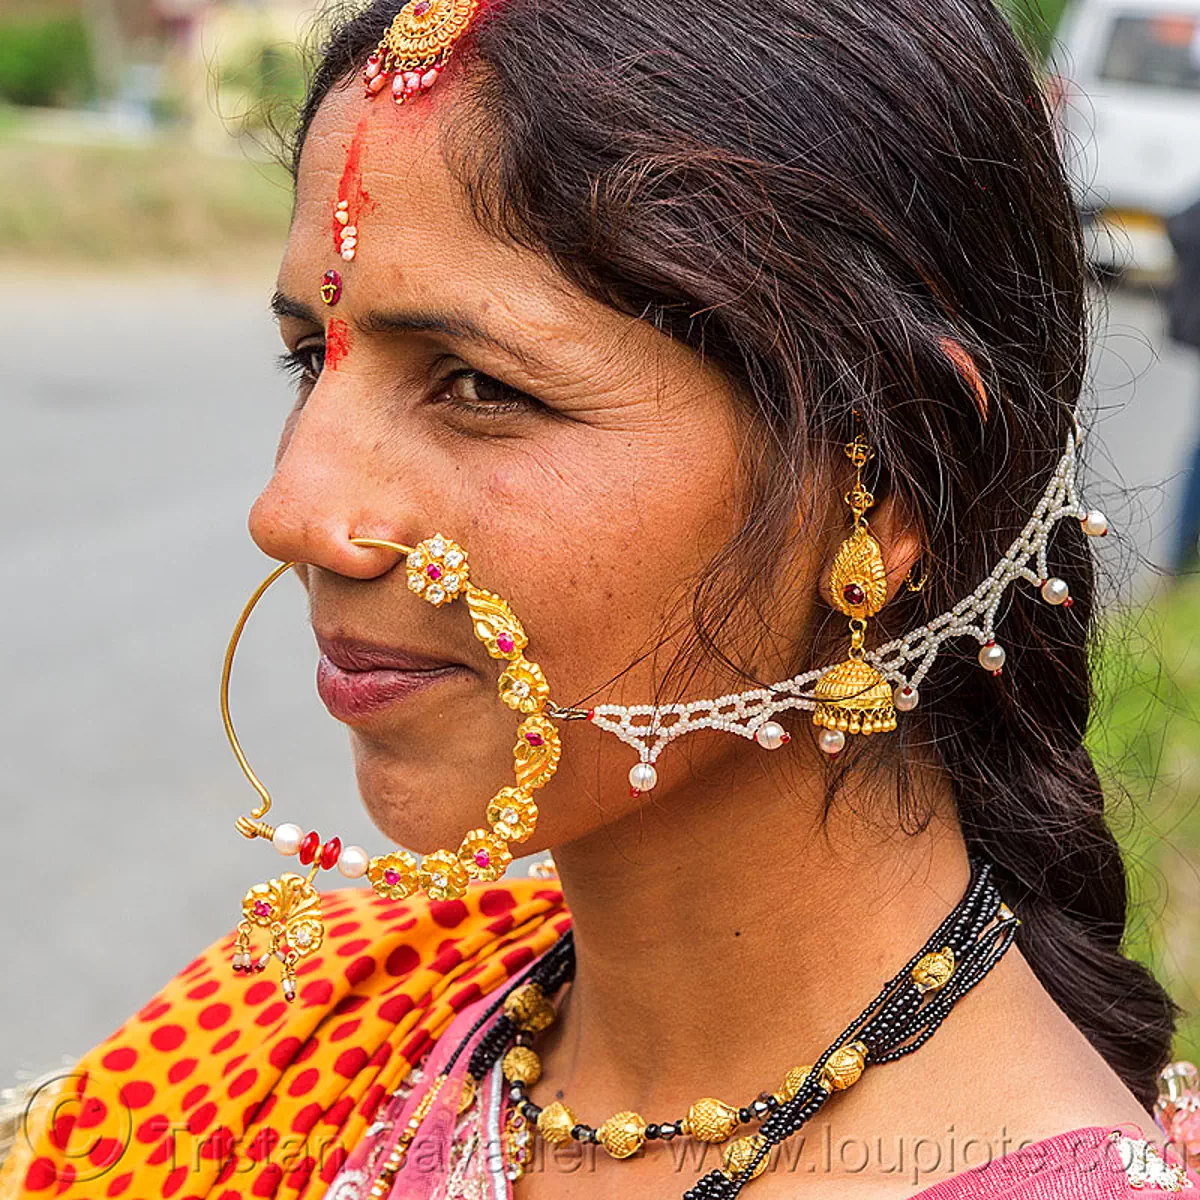 hindu woman with large nose ring piercing jewelry (india), bride, india, indian wedding, jewelry, nose chain, nose piercing, nose ring, nostril piercing, tola gunth, woman